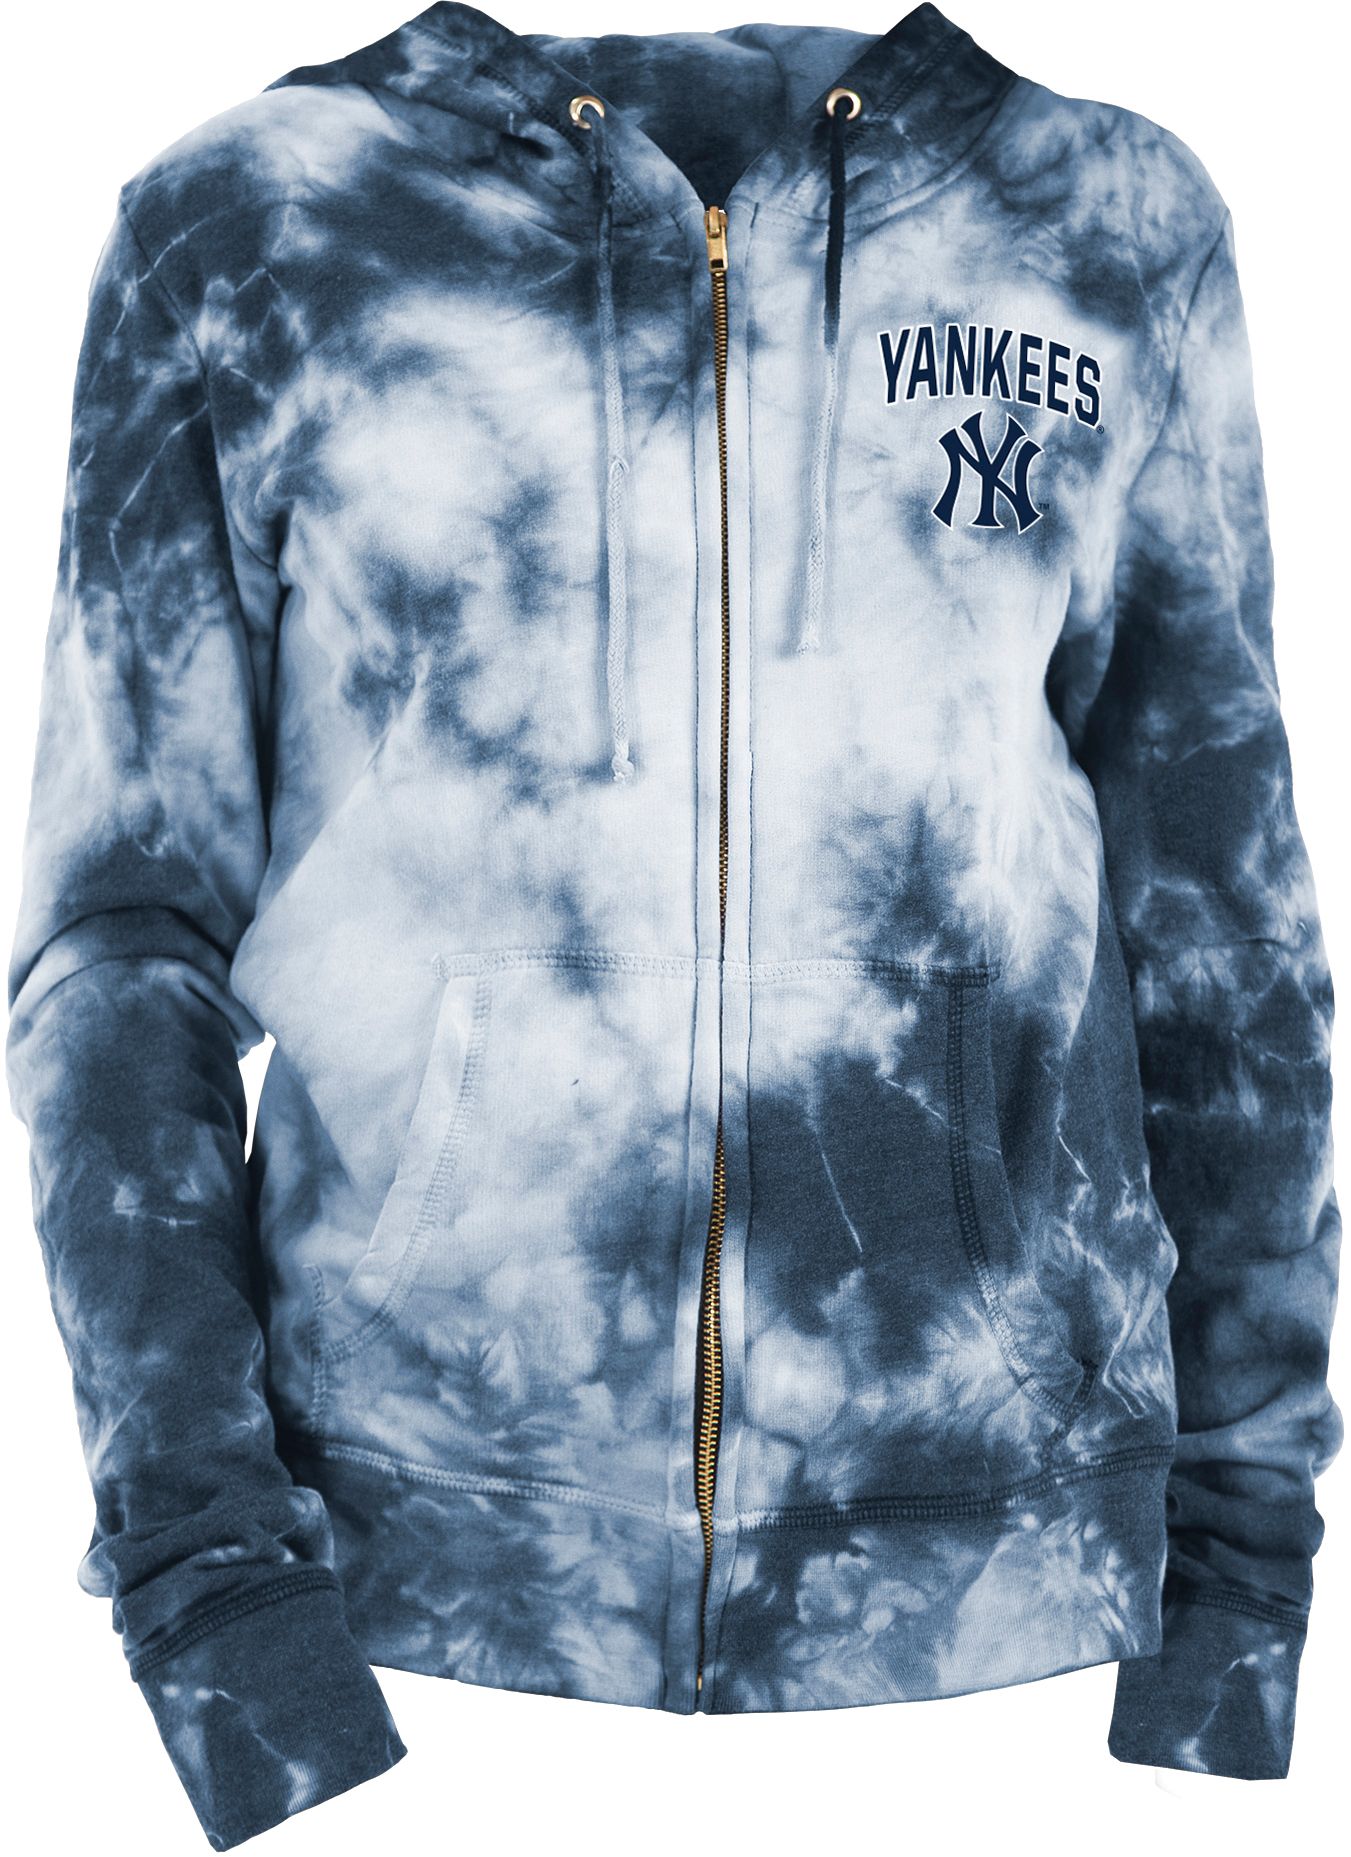 Girls Youth New Era Navy York Yankees Space Dye Full-Zip Hoodie Size: Medium